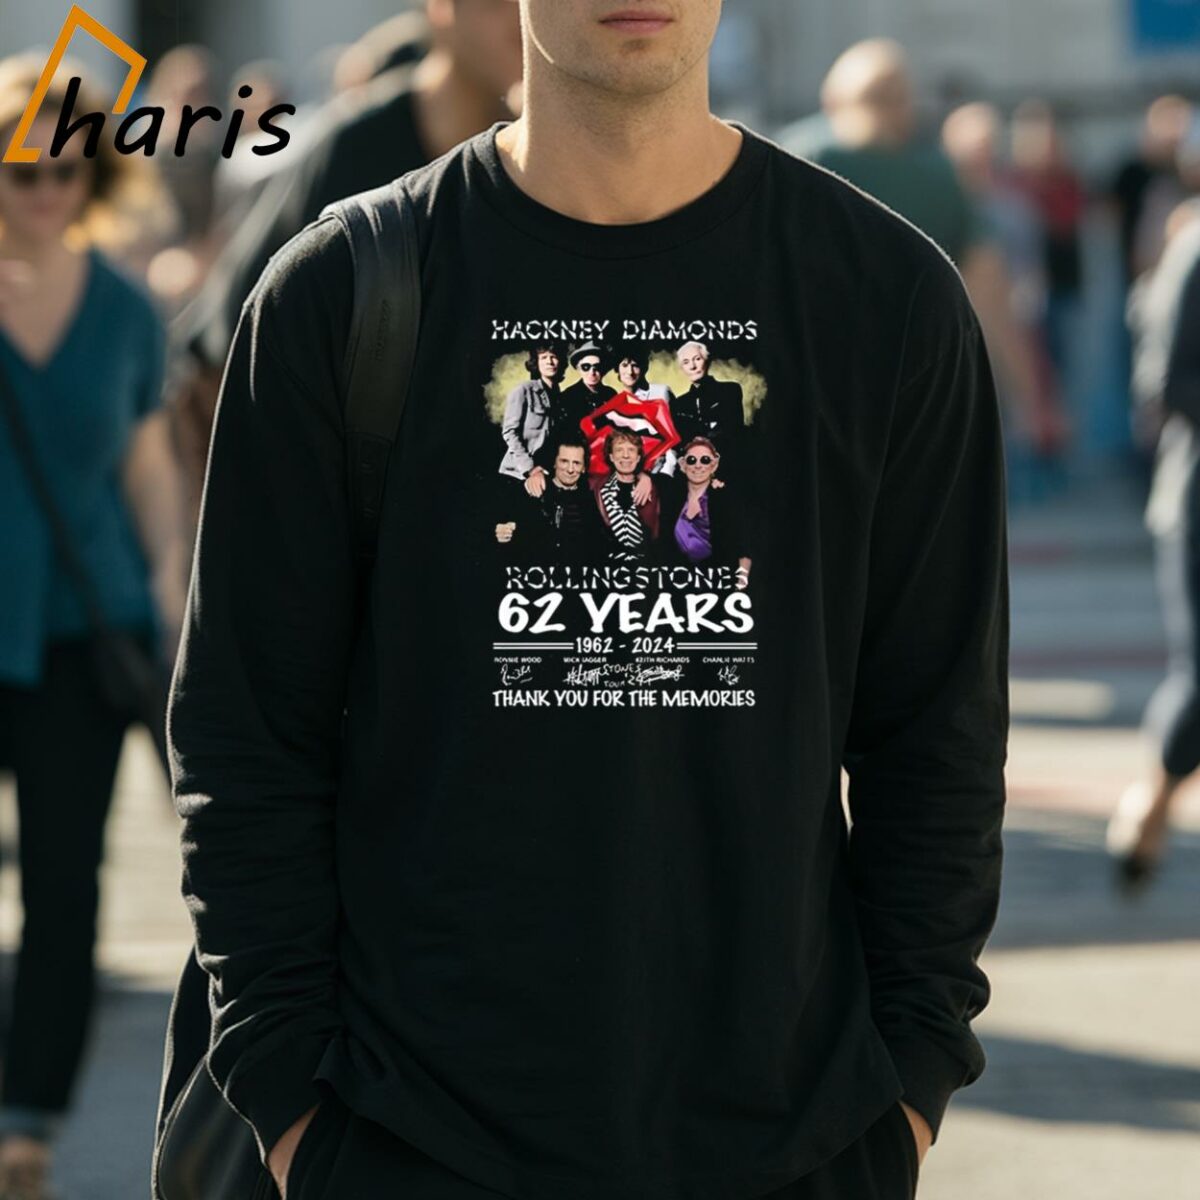 Hackney Diamonds Rolling Stones 62 Years Signature Thank You The Memories Signatures T shirt 3 Long Sleeve Shirt